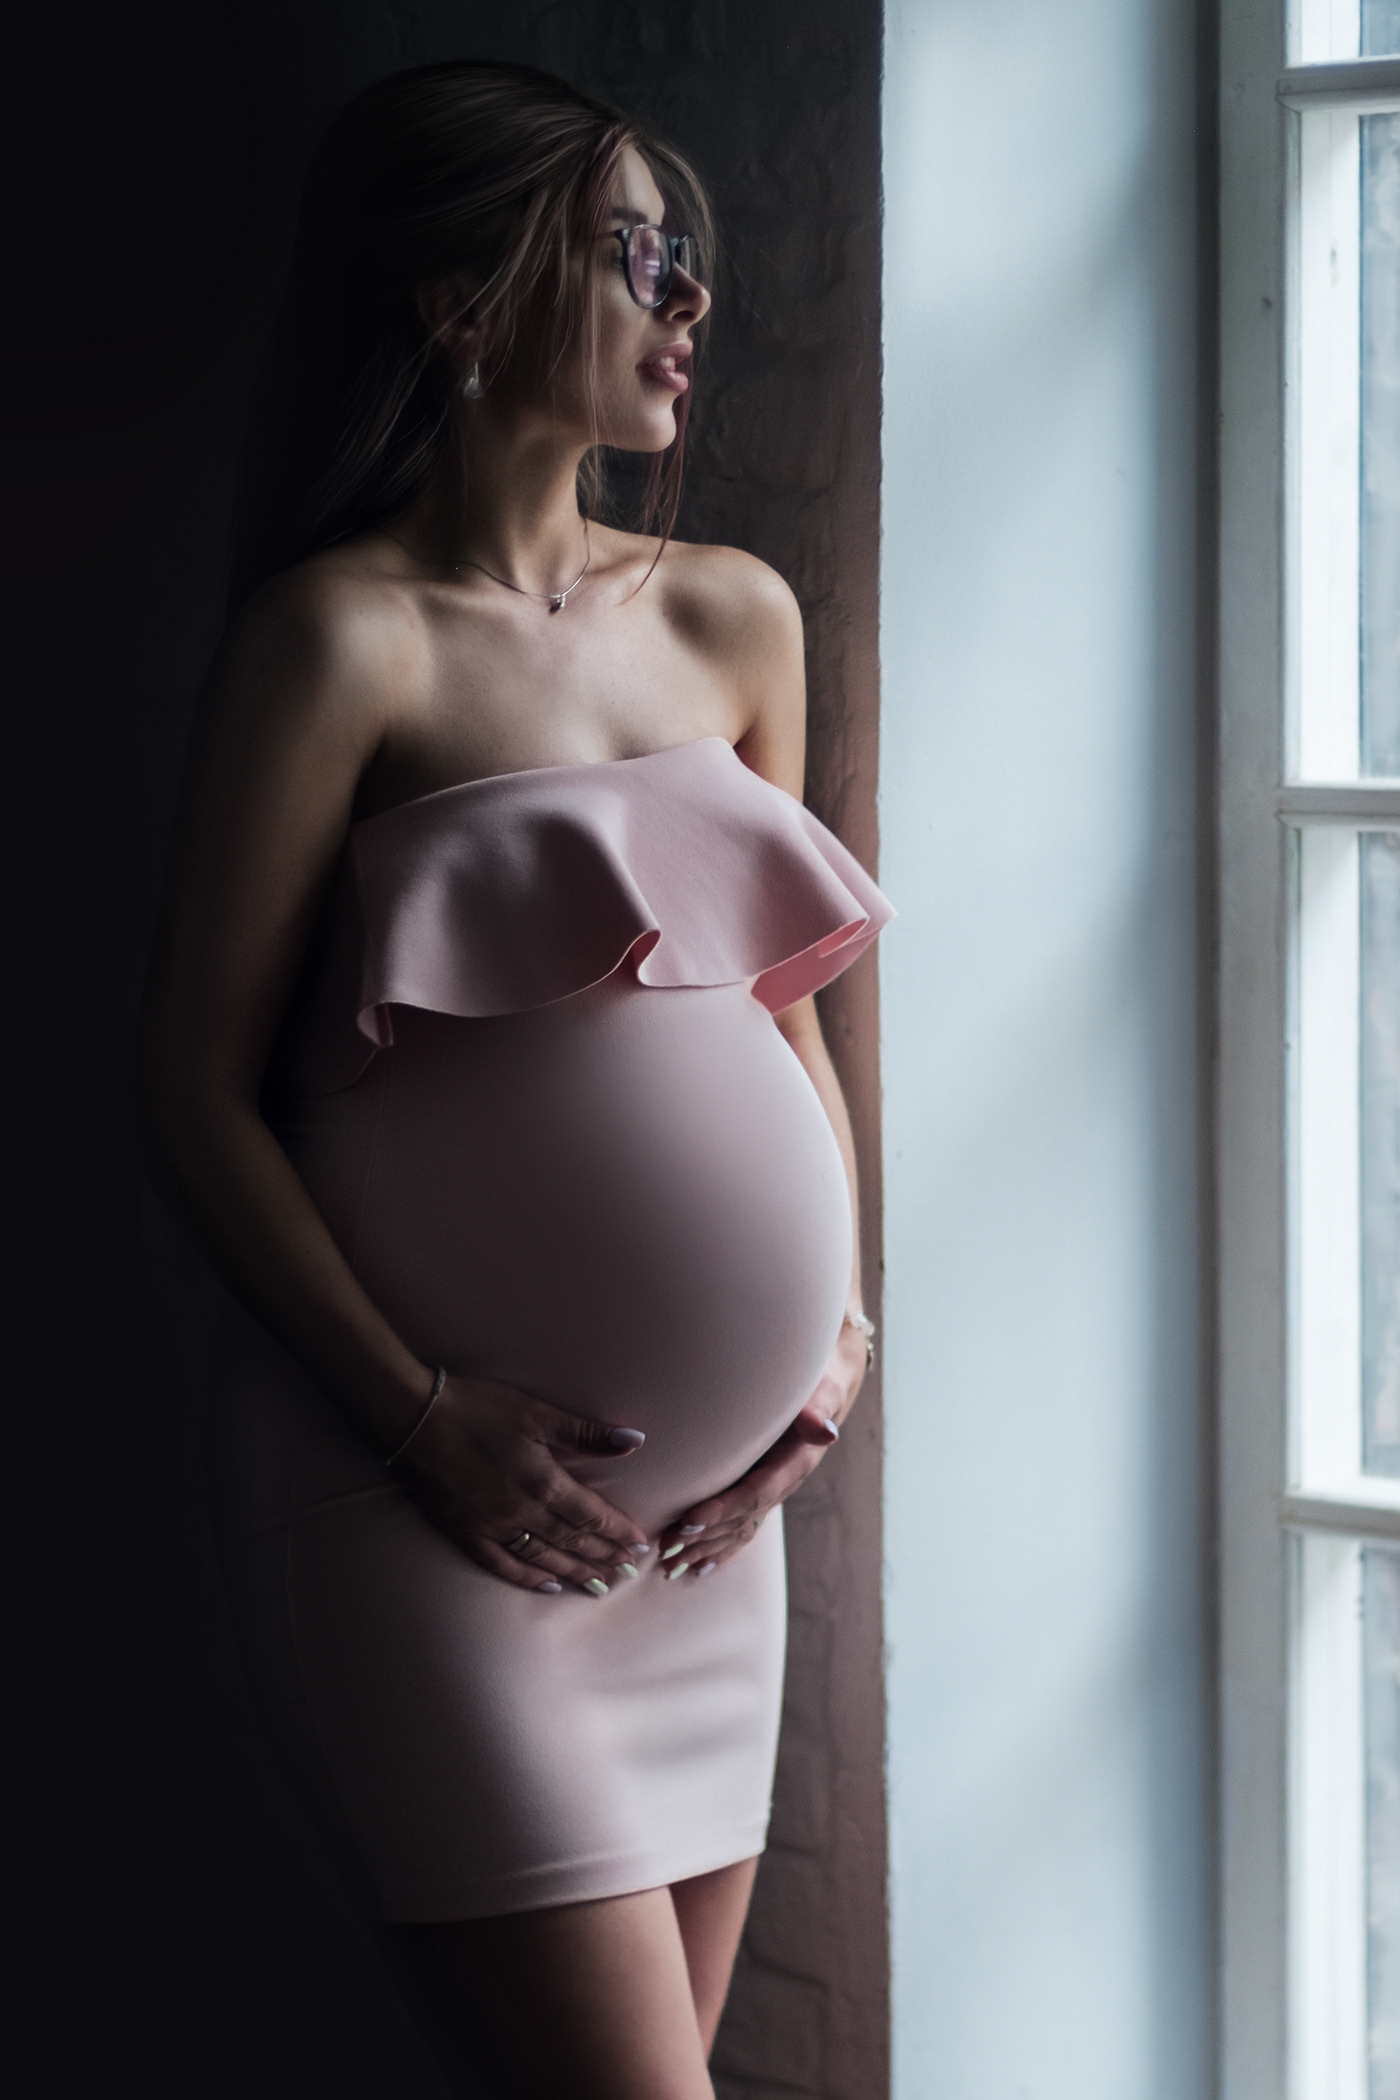 family maternity pregnancy photography pregnant voightlander woman xpro1 fujifilm photoshoot pregnant woman